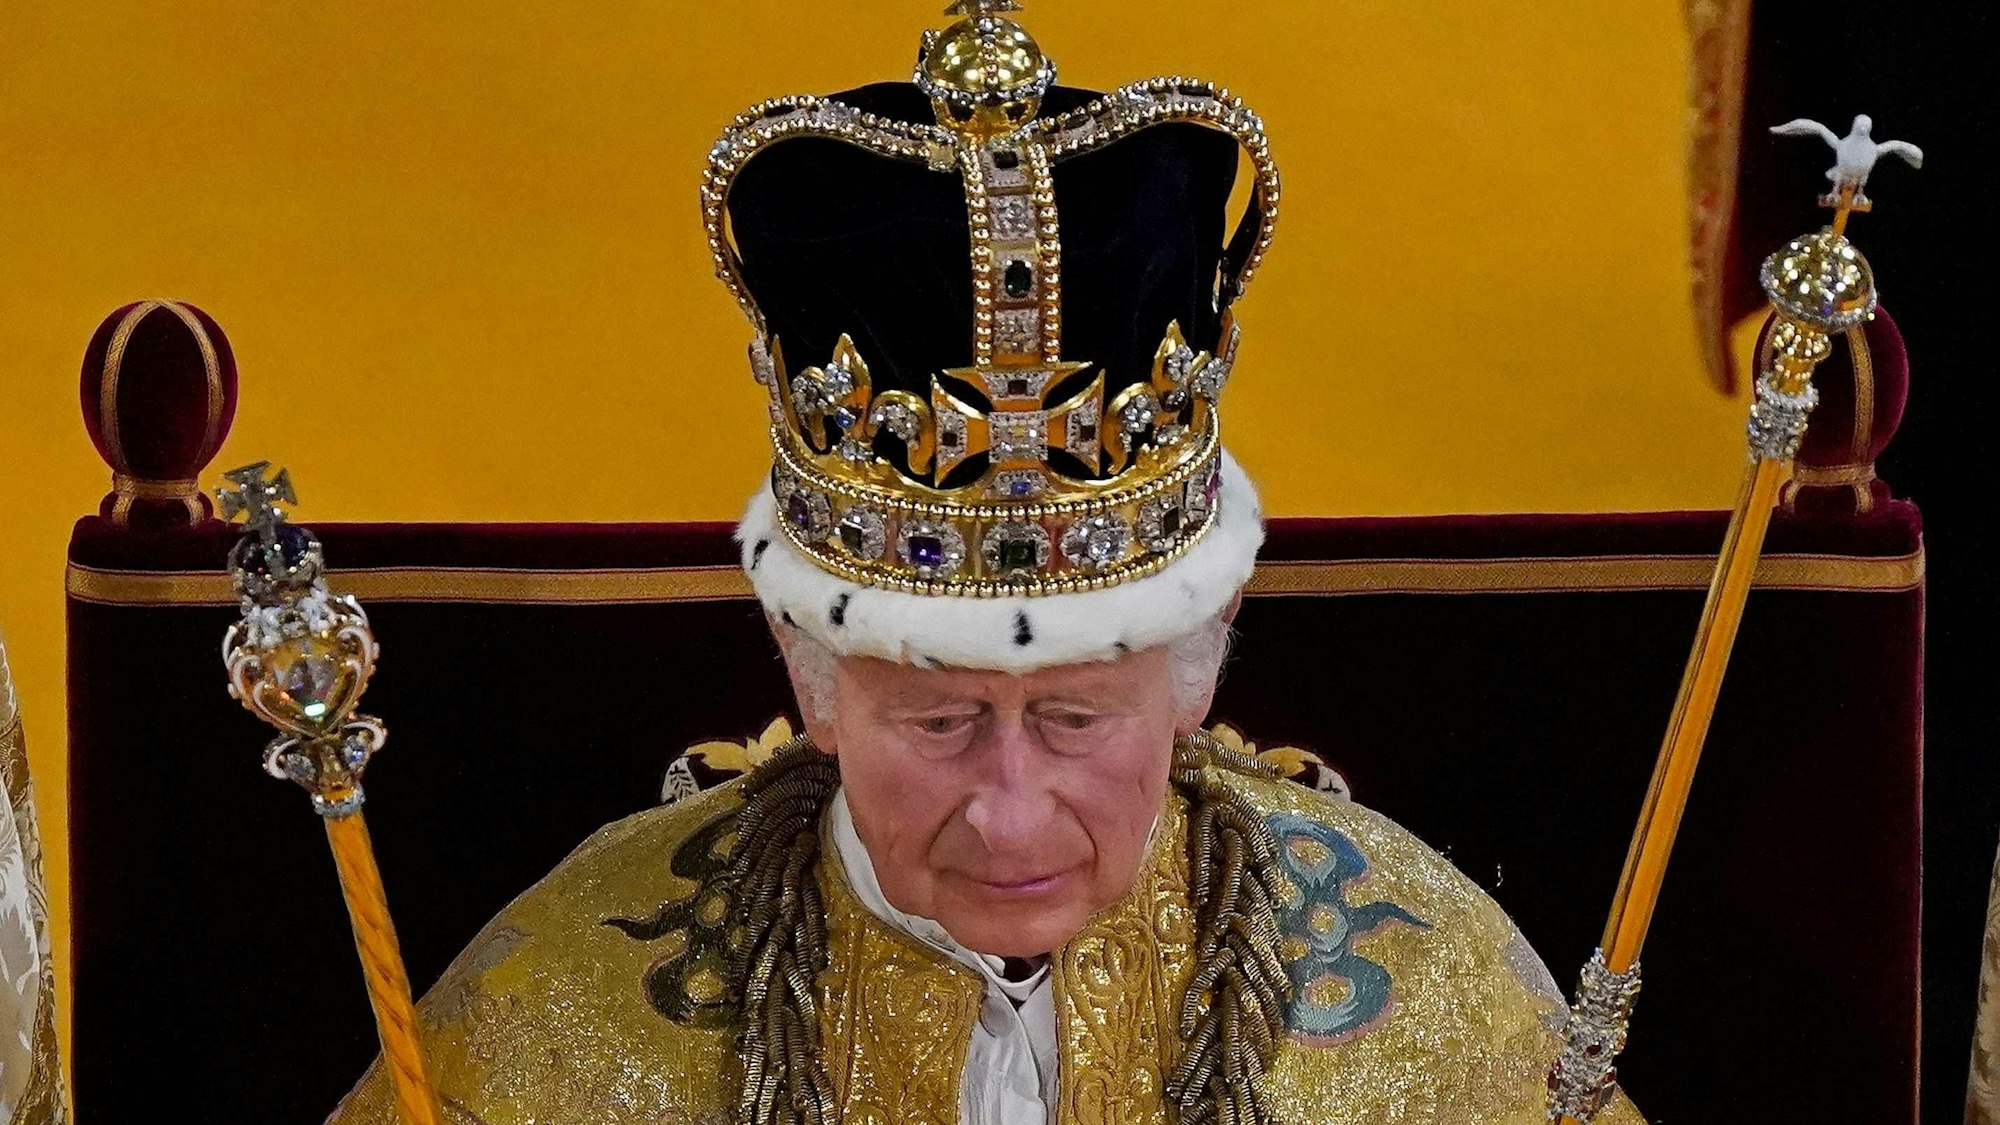 König Charles III. ist gekrönt worden.